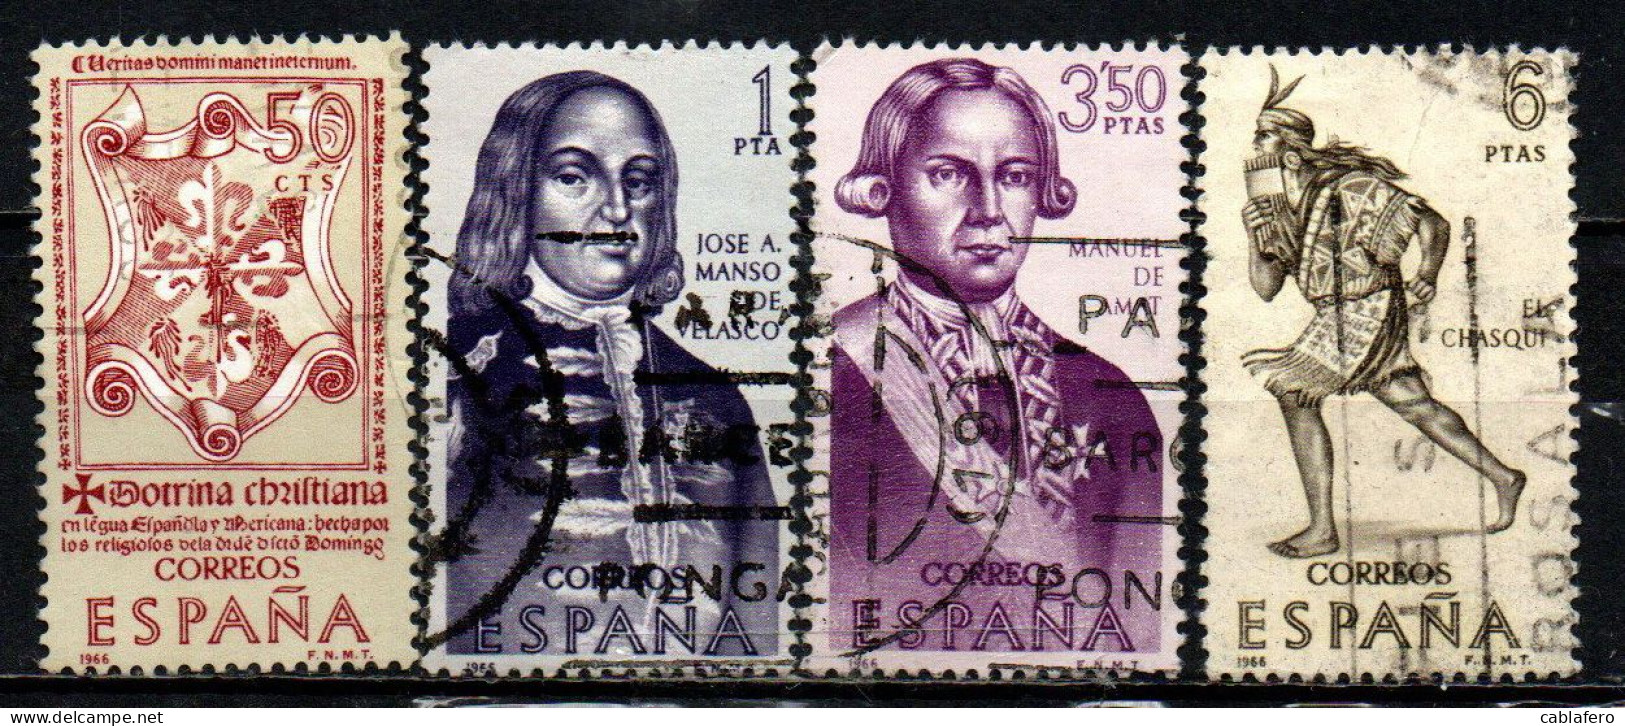 SPAGNA - 1966 - CONQUISTATORI DELL'AMERICA: ANTONIO DE MENDOZA, LA DOTTRINA CRISITANA, M. DE AMAT Y YUNYENT - USATI - Used Stamps